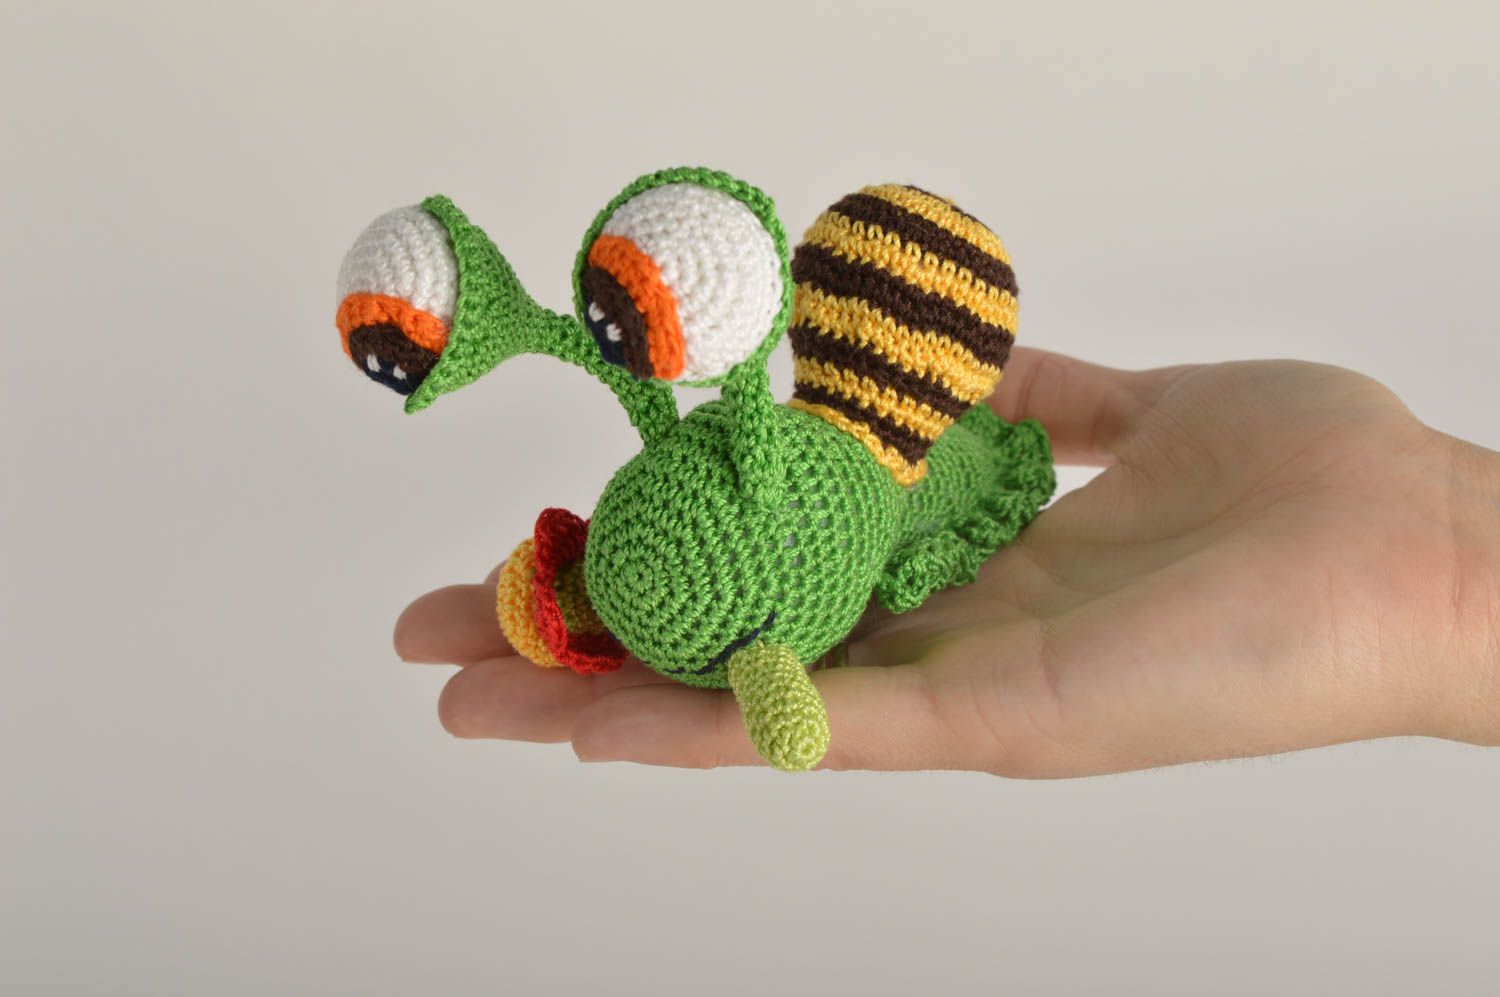 Beautiful handmade crochet toy stuffed soft toy interior decorating gift ideas photo 2